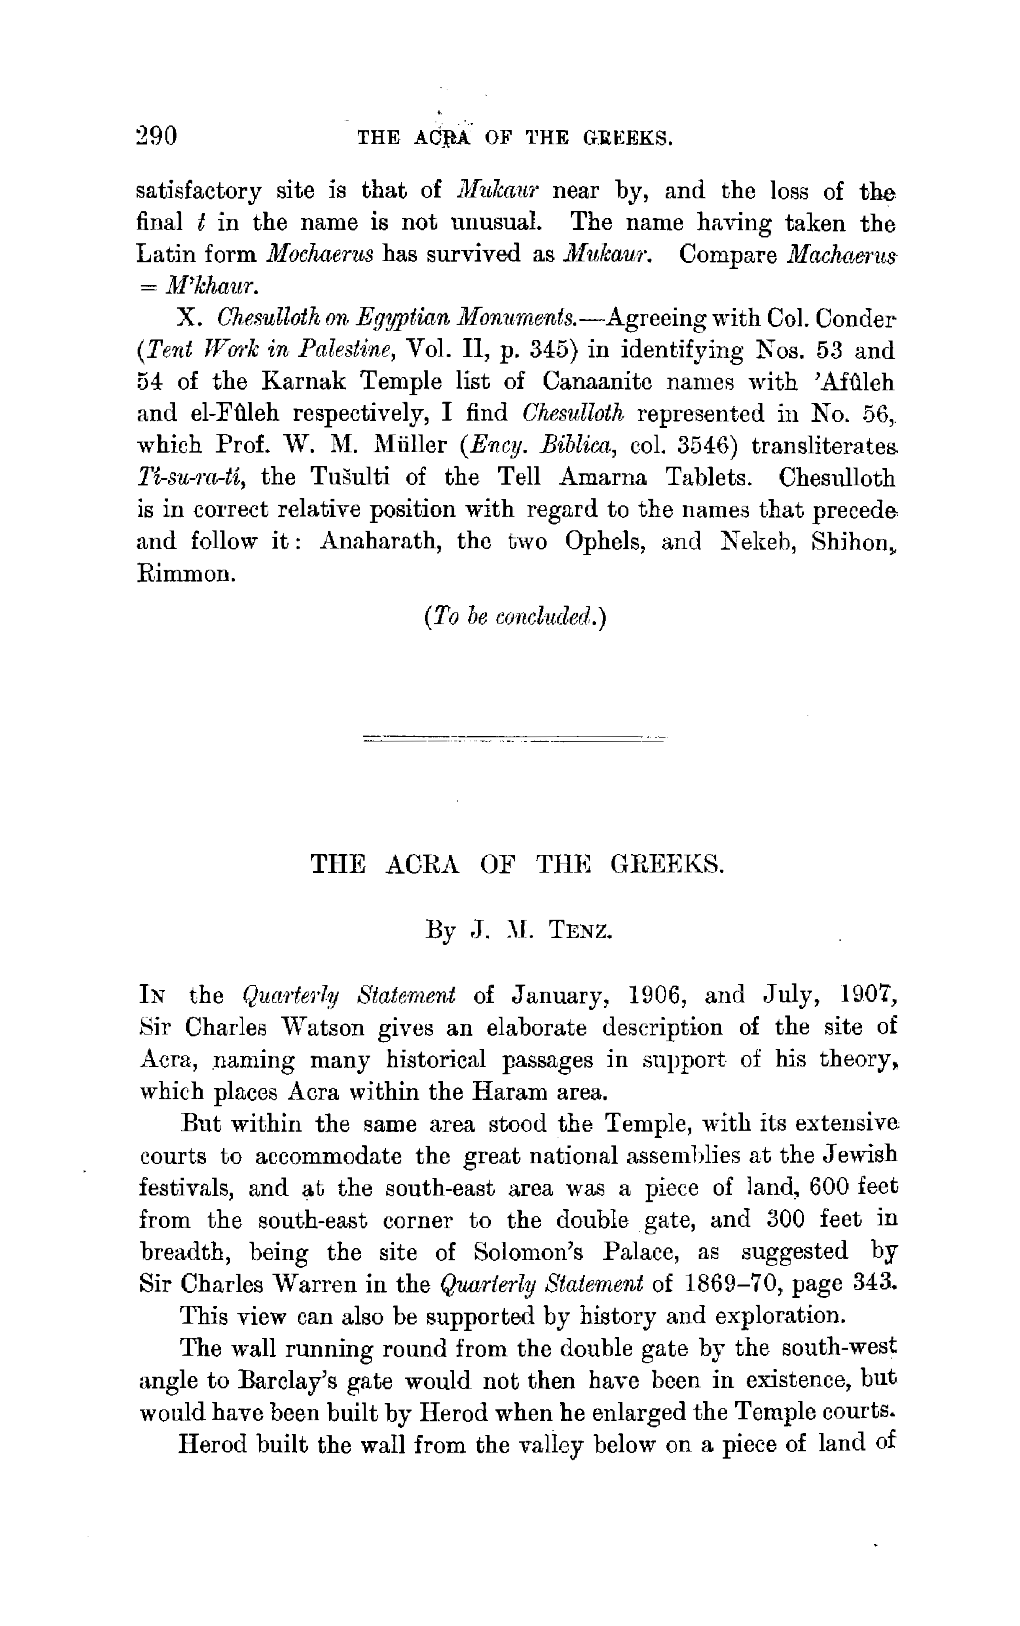 Johann Martin Tenz [1829-?], "The Acra of the Greeks," Palestine